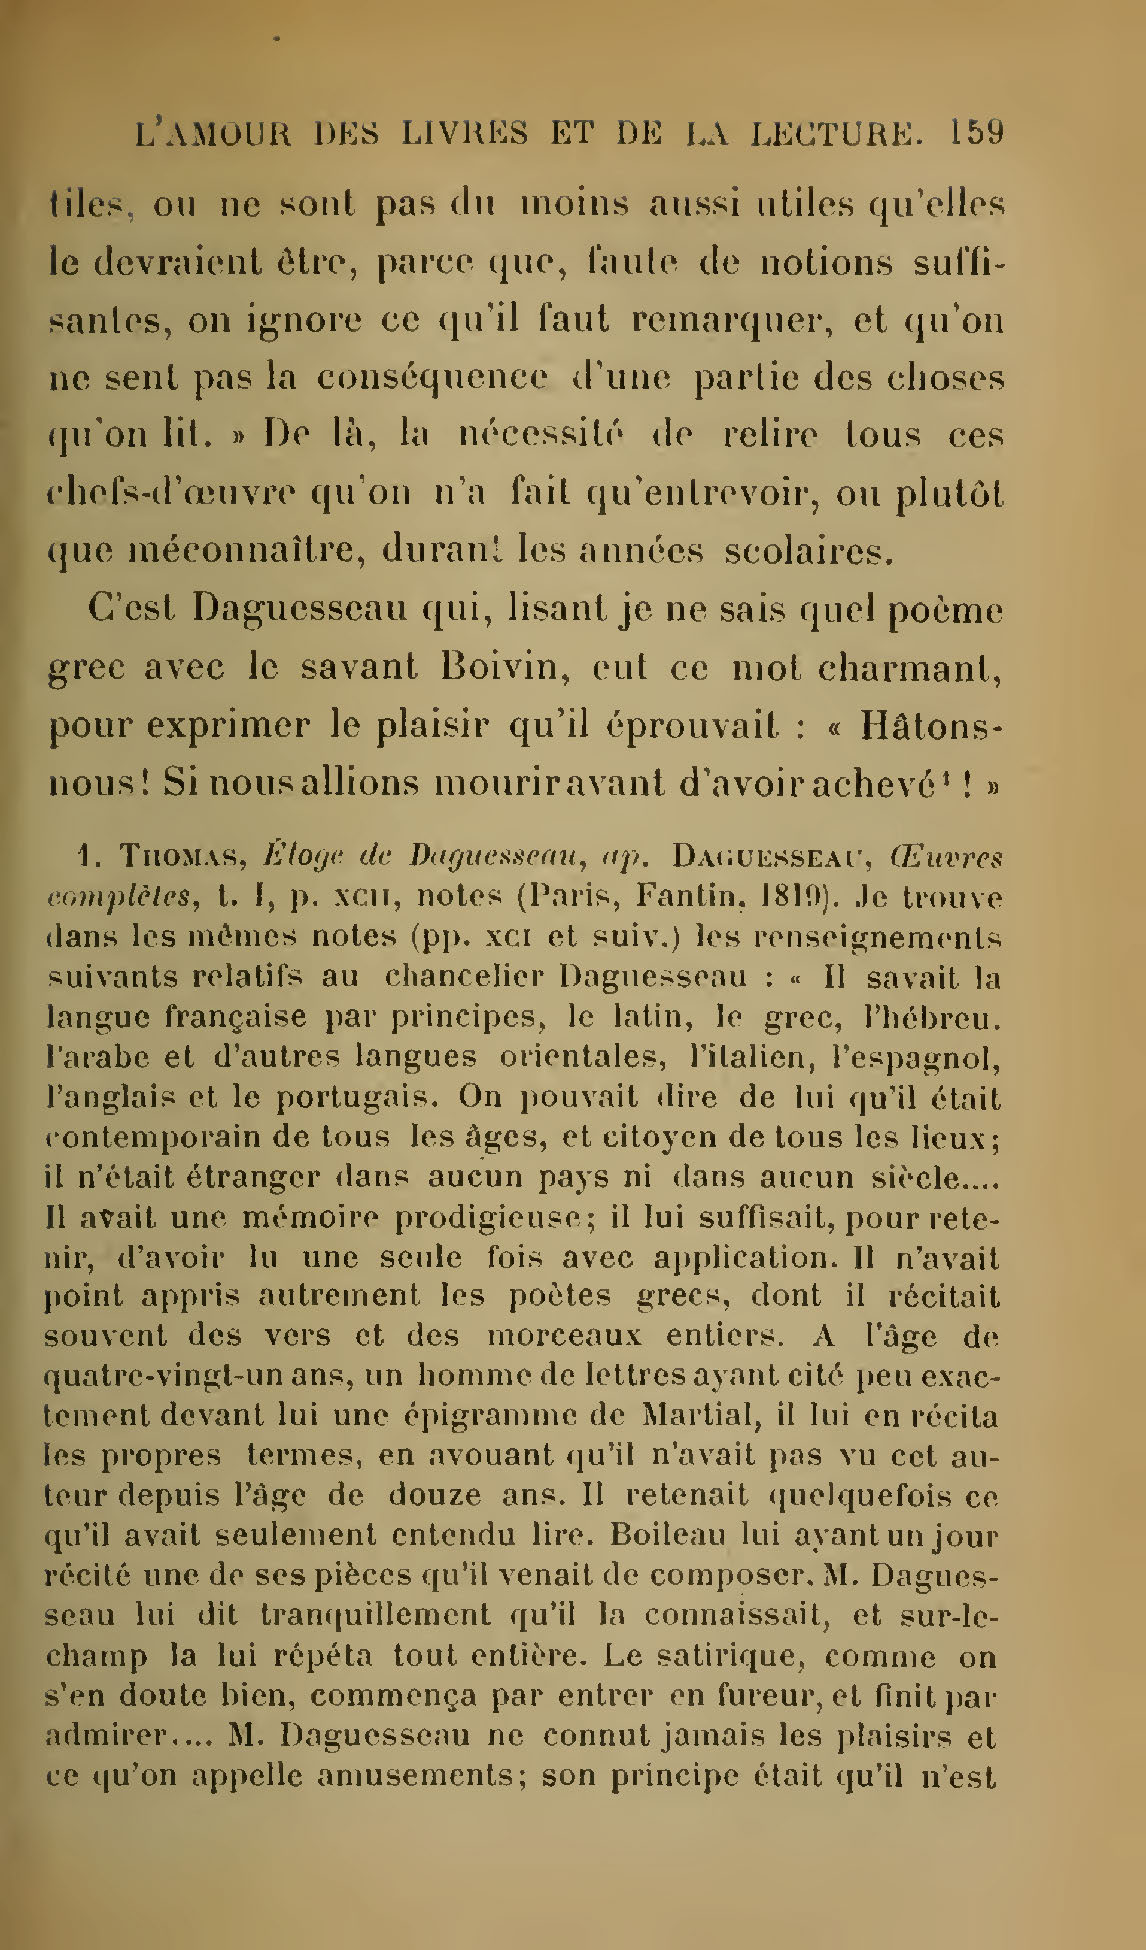 Albert Cim, Le Livre, t. I, p. 159.